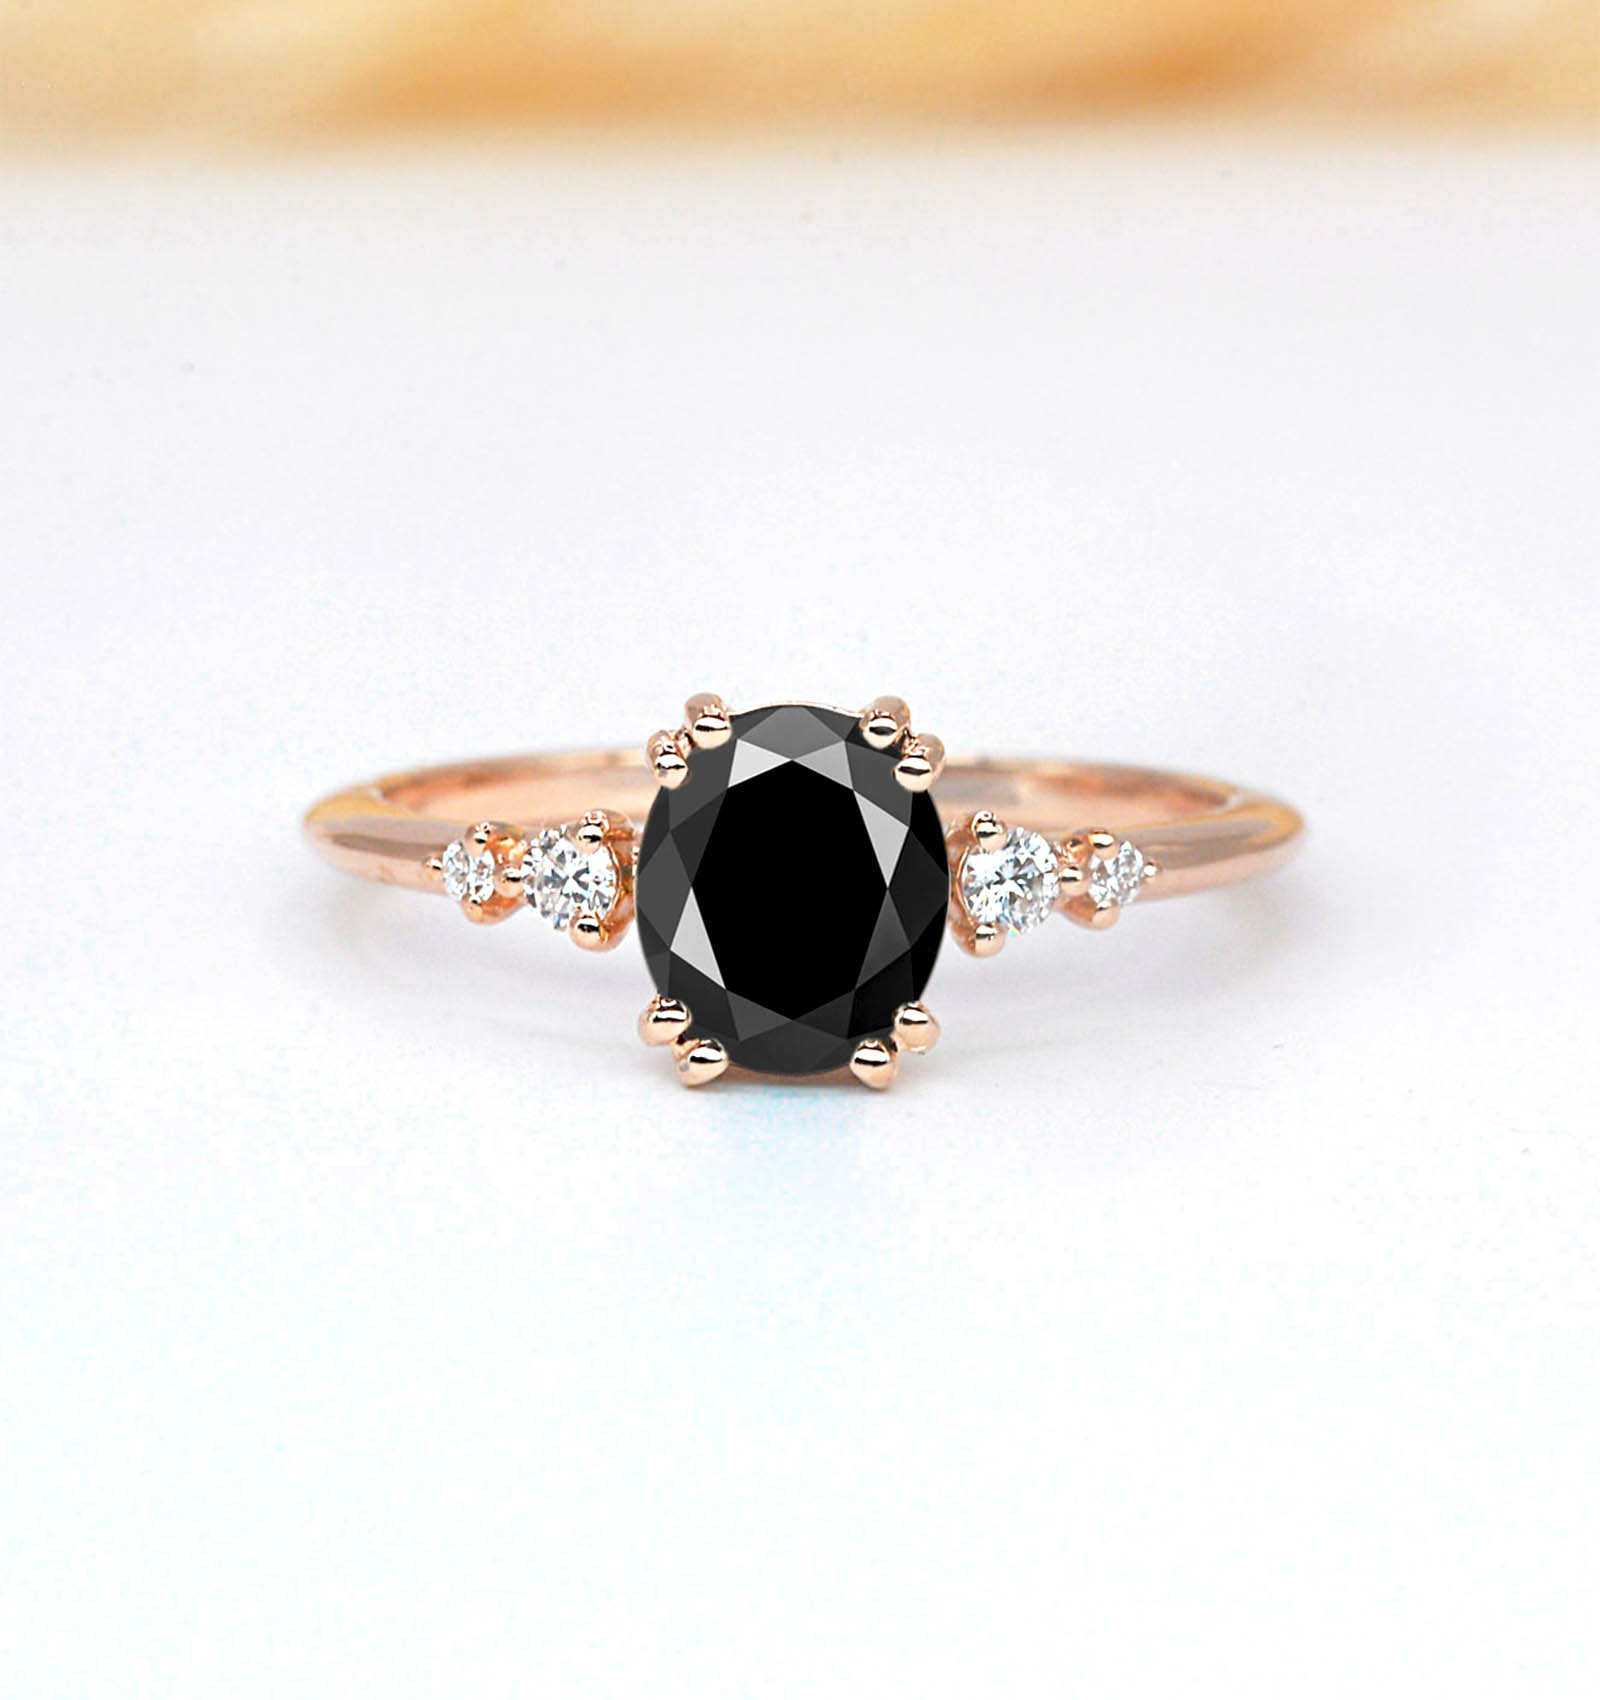 1.5ct black diamond ring